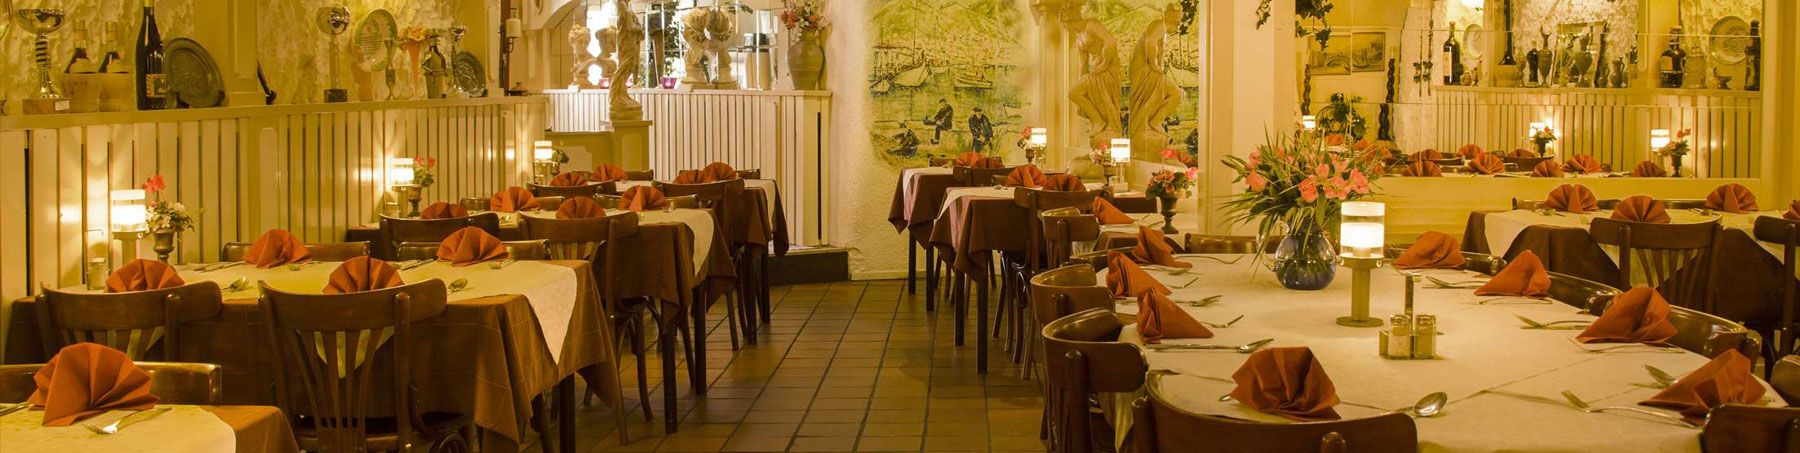 Italiaans restaurant La Perla Helmond